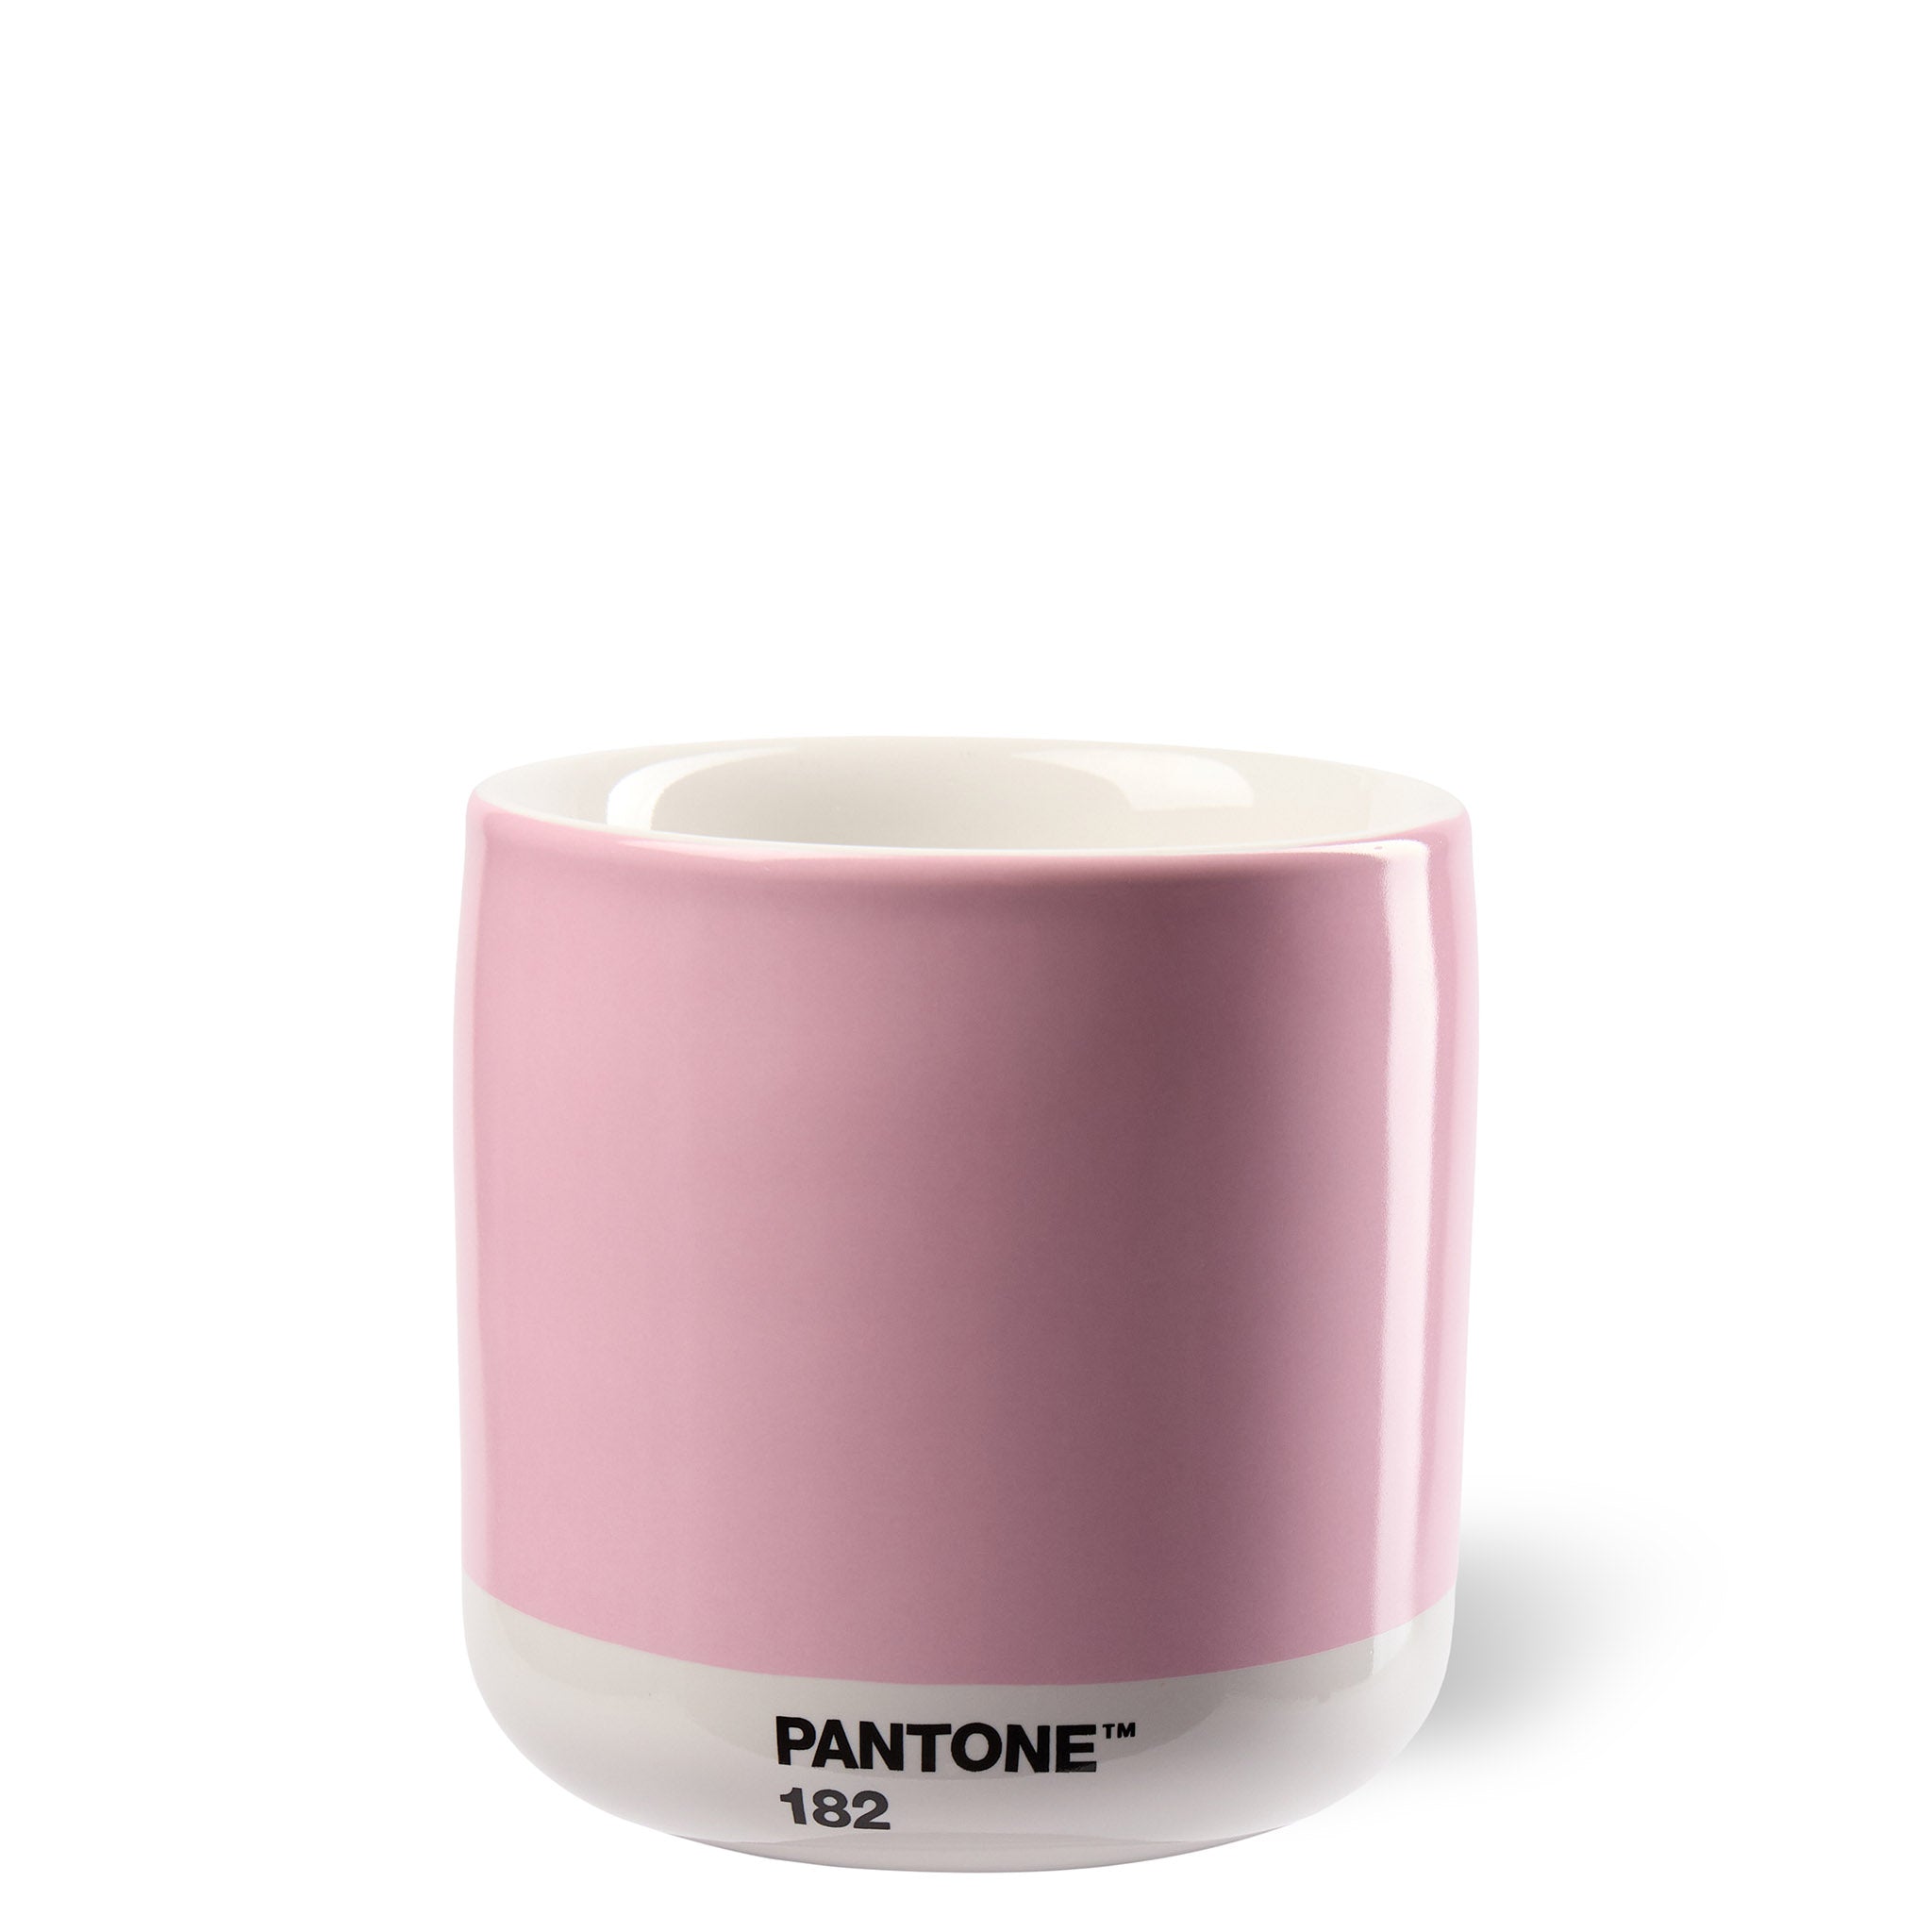 Pantone Porzellan-Thermobecher Latte Macchiato, 4er-Set in Geschenkbox